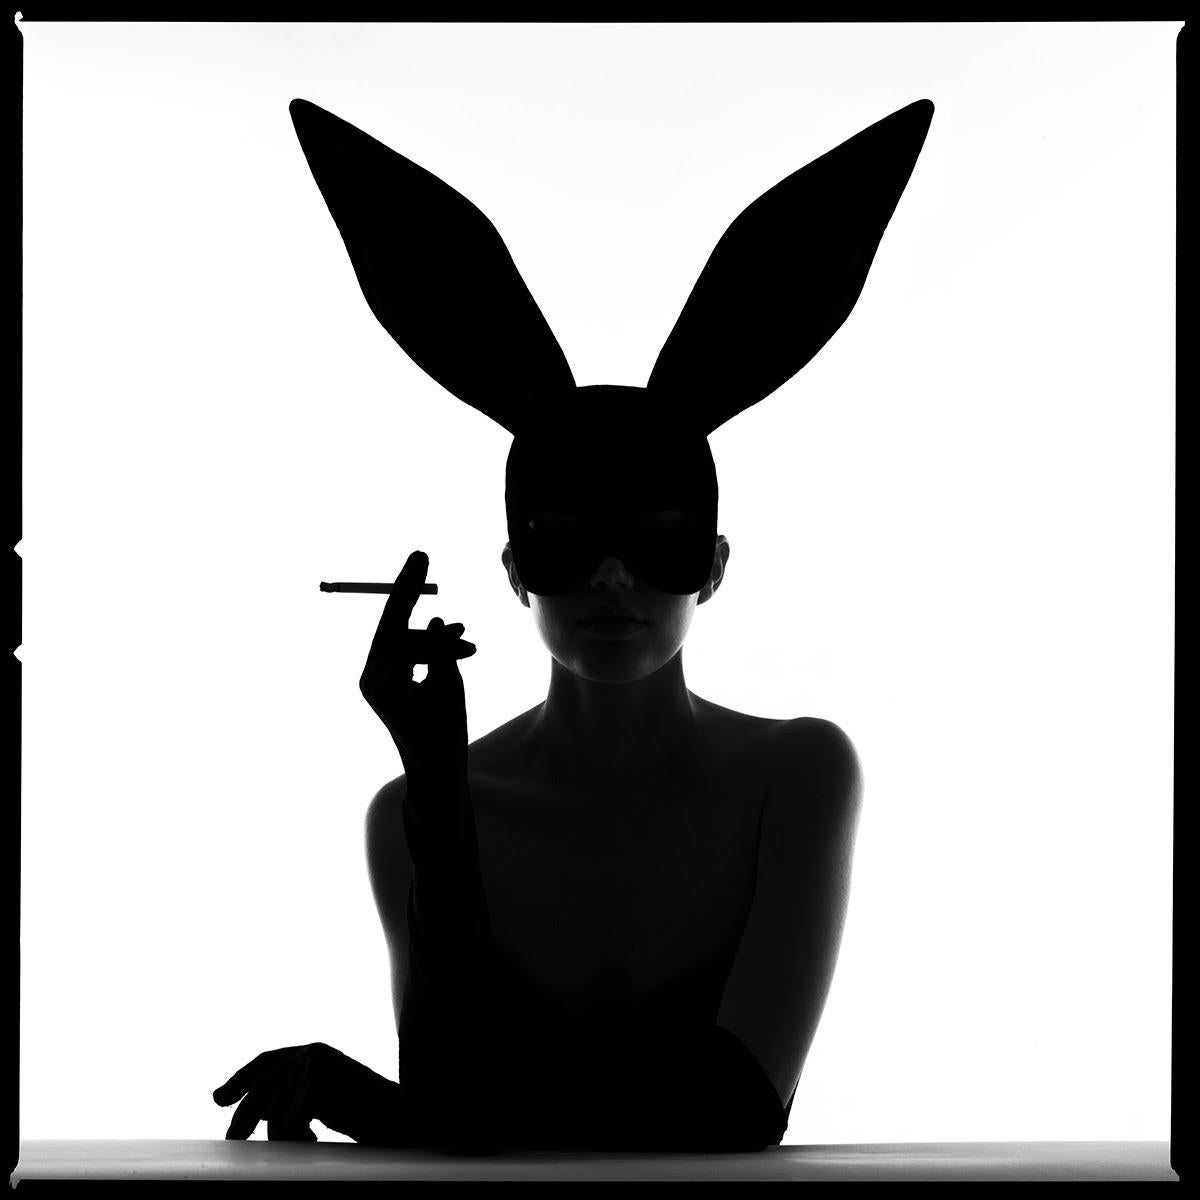 Tyler Shields Figurative Photograph - Bunny Silhouette III (18" x 18")